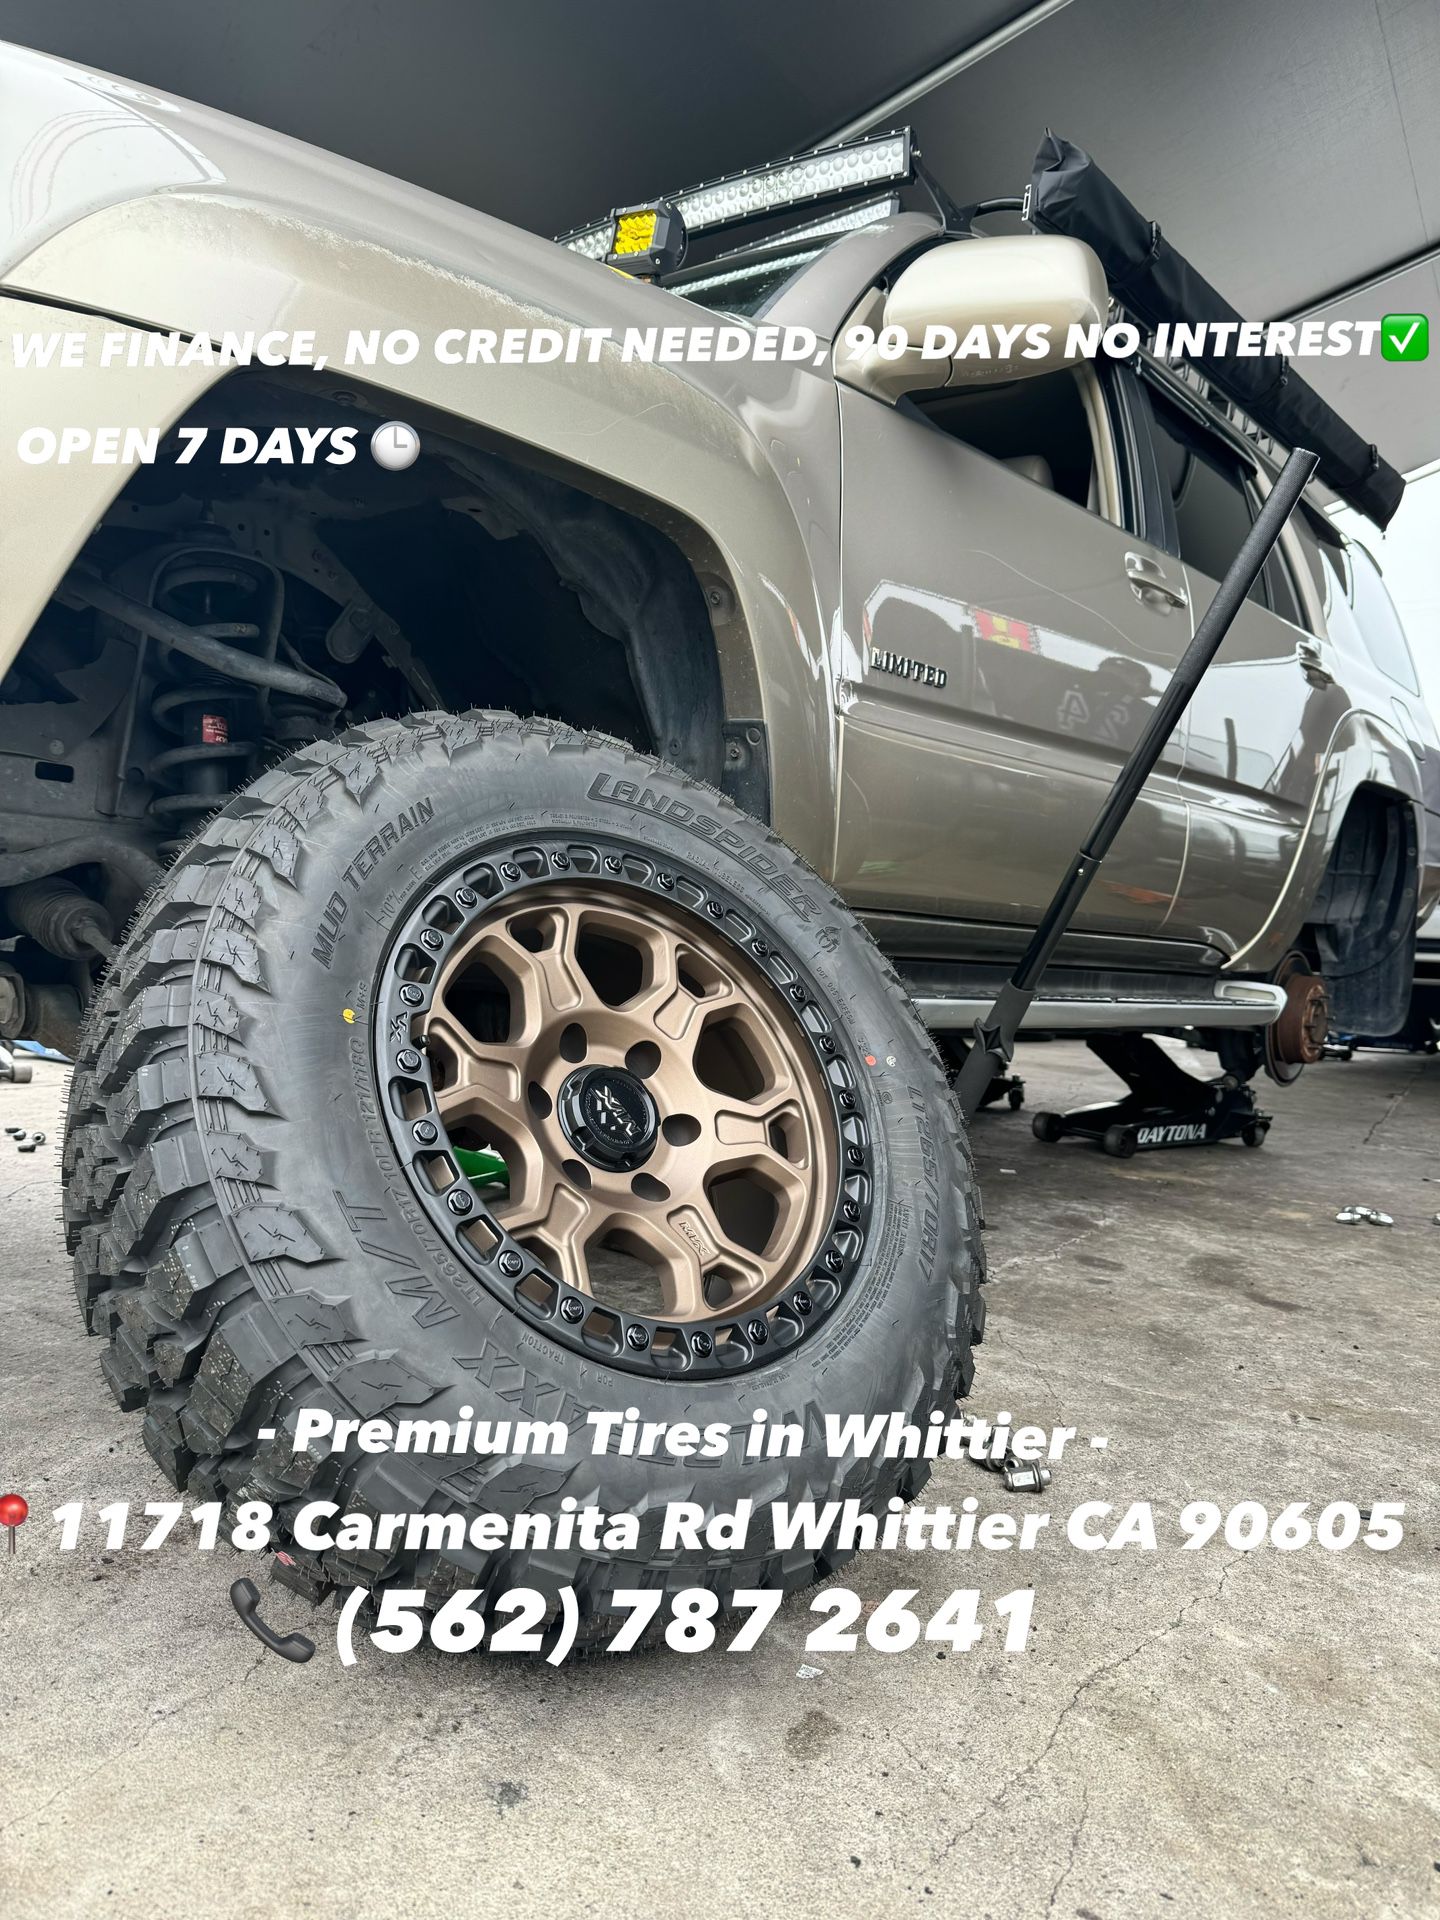 MVX Bronze Wheels 6x139.7 With 265/70R17 Mud Terrain For Tacoma 4Runner Sequoia FJ Chevy Silverado Yukon GMC Sierra And More 